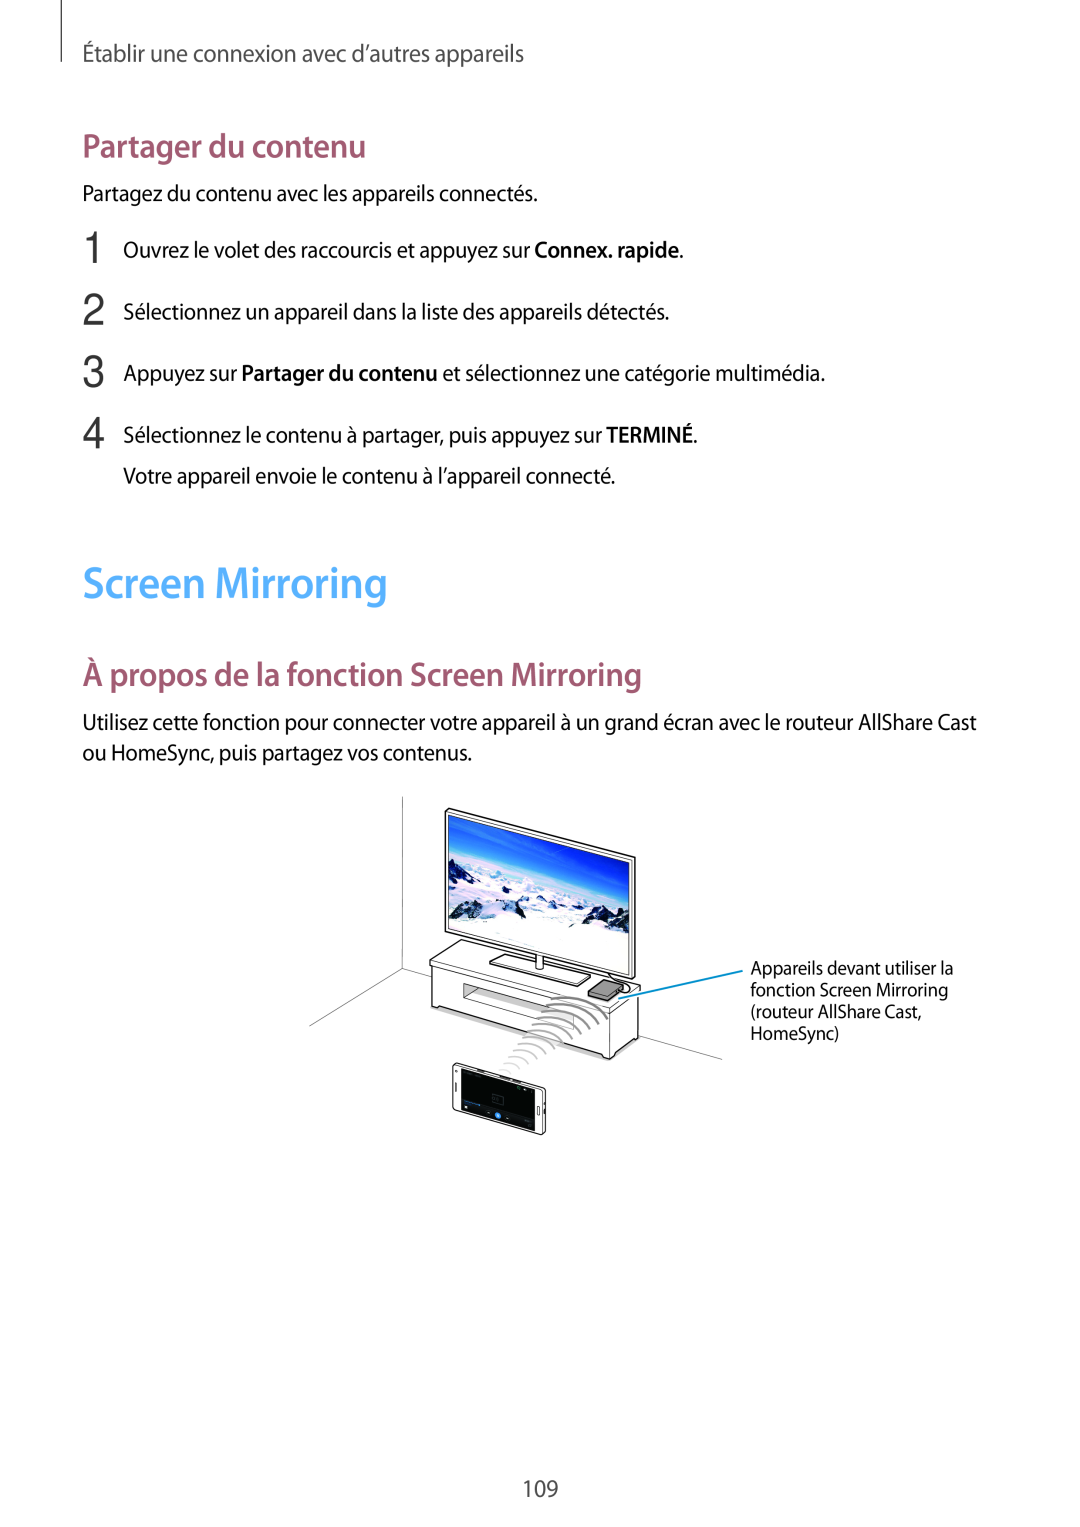 Samsung SM-A500FZKUFTM, SM-A500FZWUXEF, SM-A500FZKUSFR Partager du contenu, À propos de la fonction Screen Mirroring 